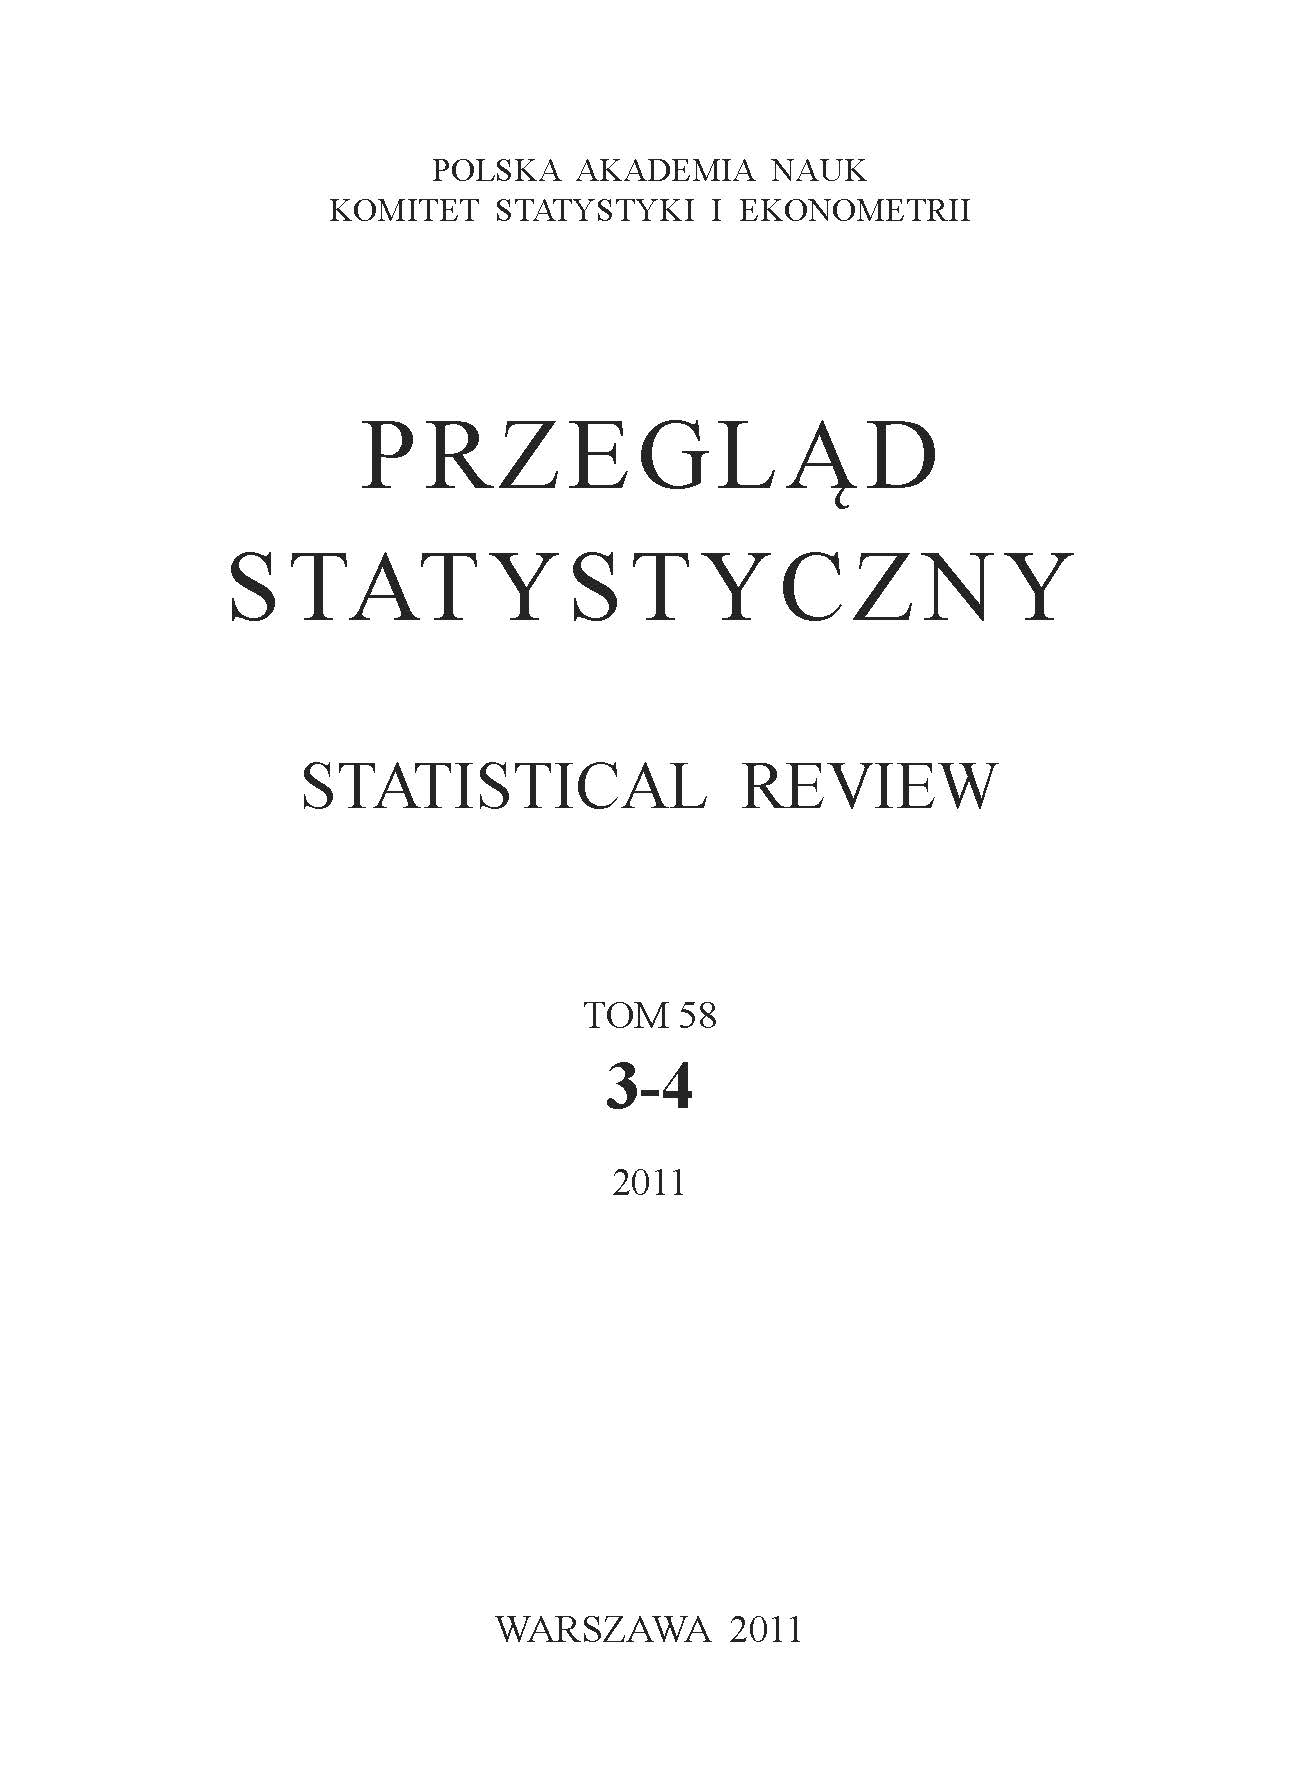 Economic Aspects of Sustainable Development in Polish Voivodeships – Multivariate Data Analysis Cover Image